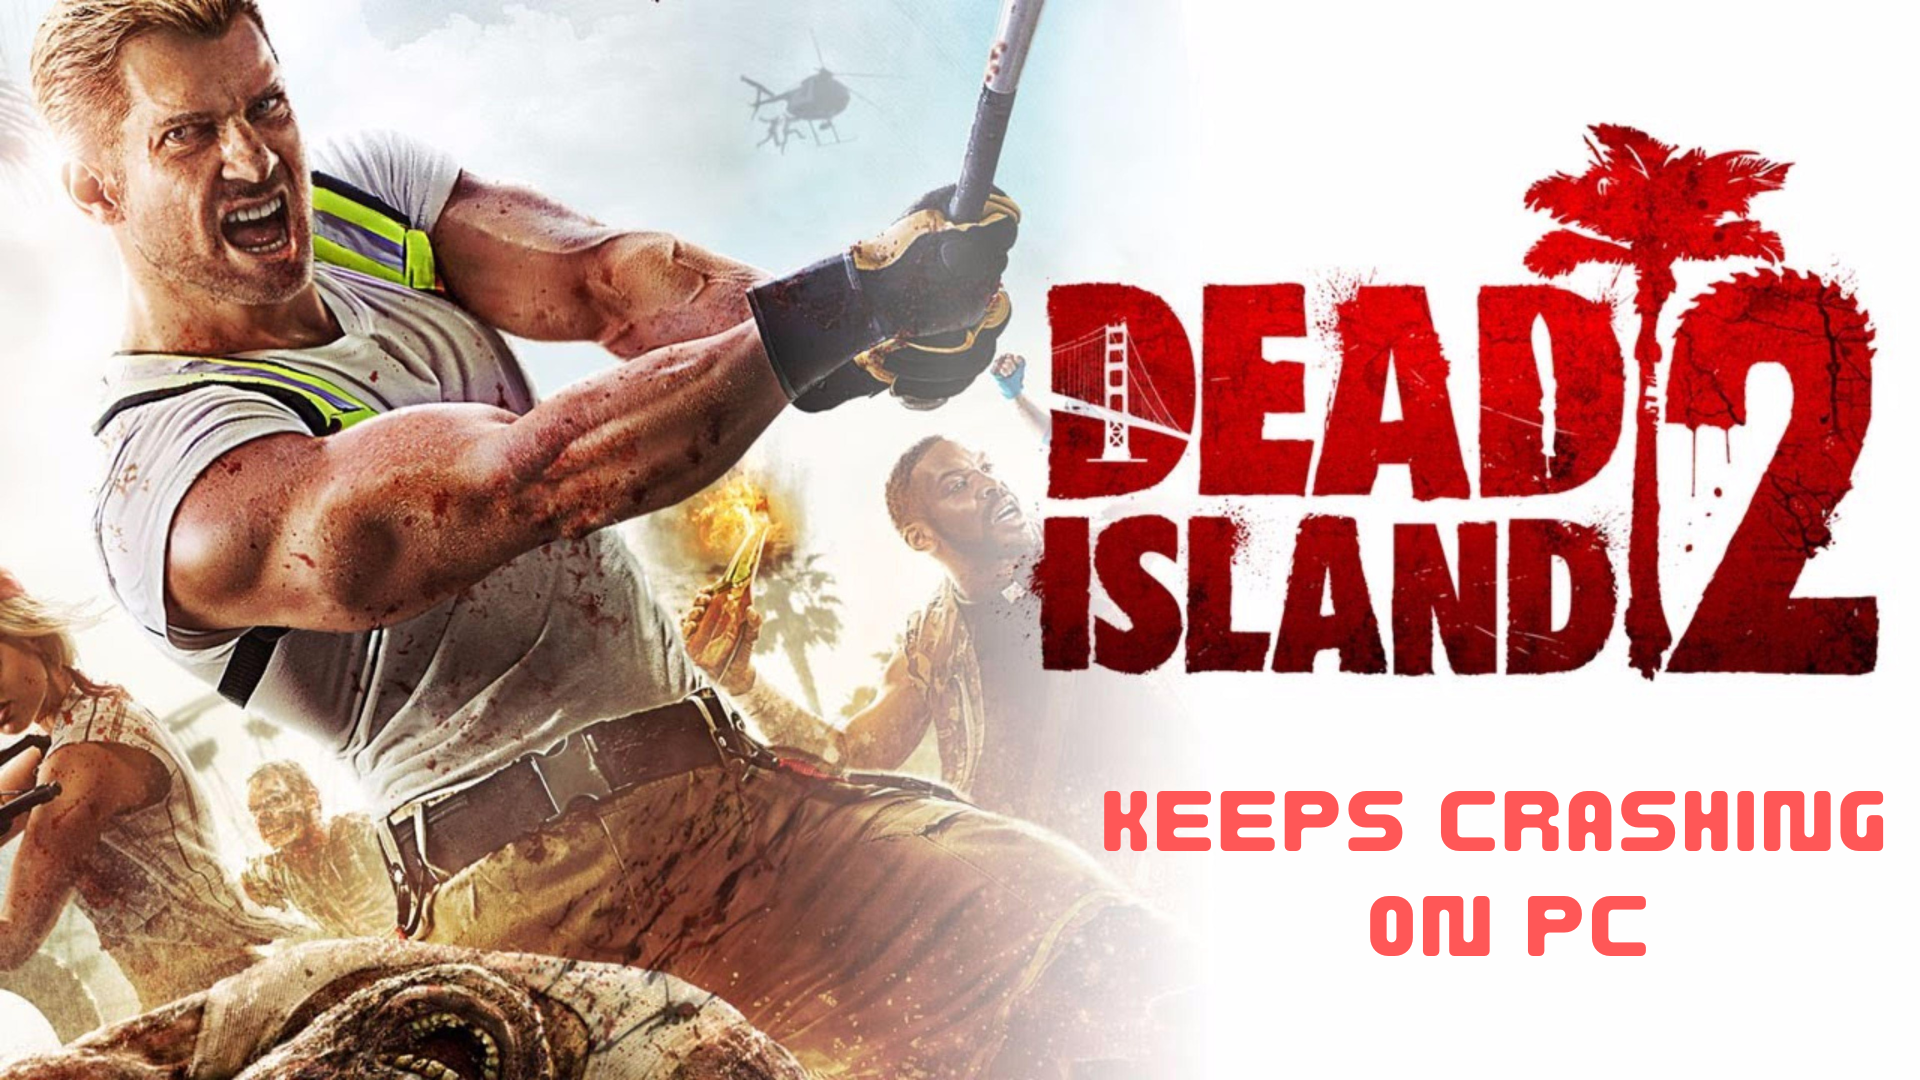 Dead island 2 keeps crasging on PC